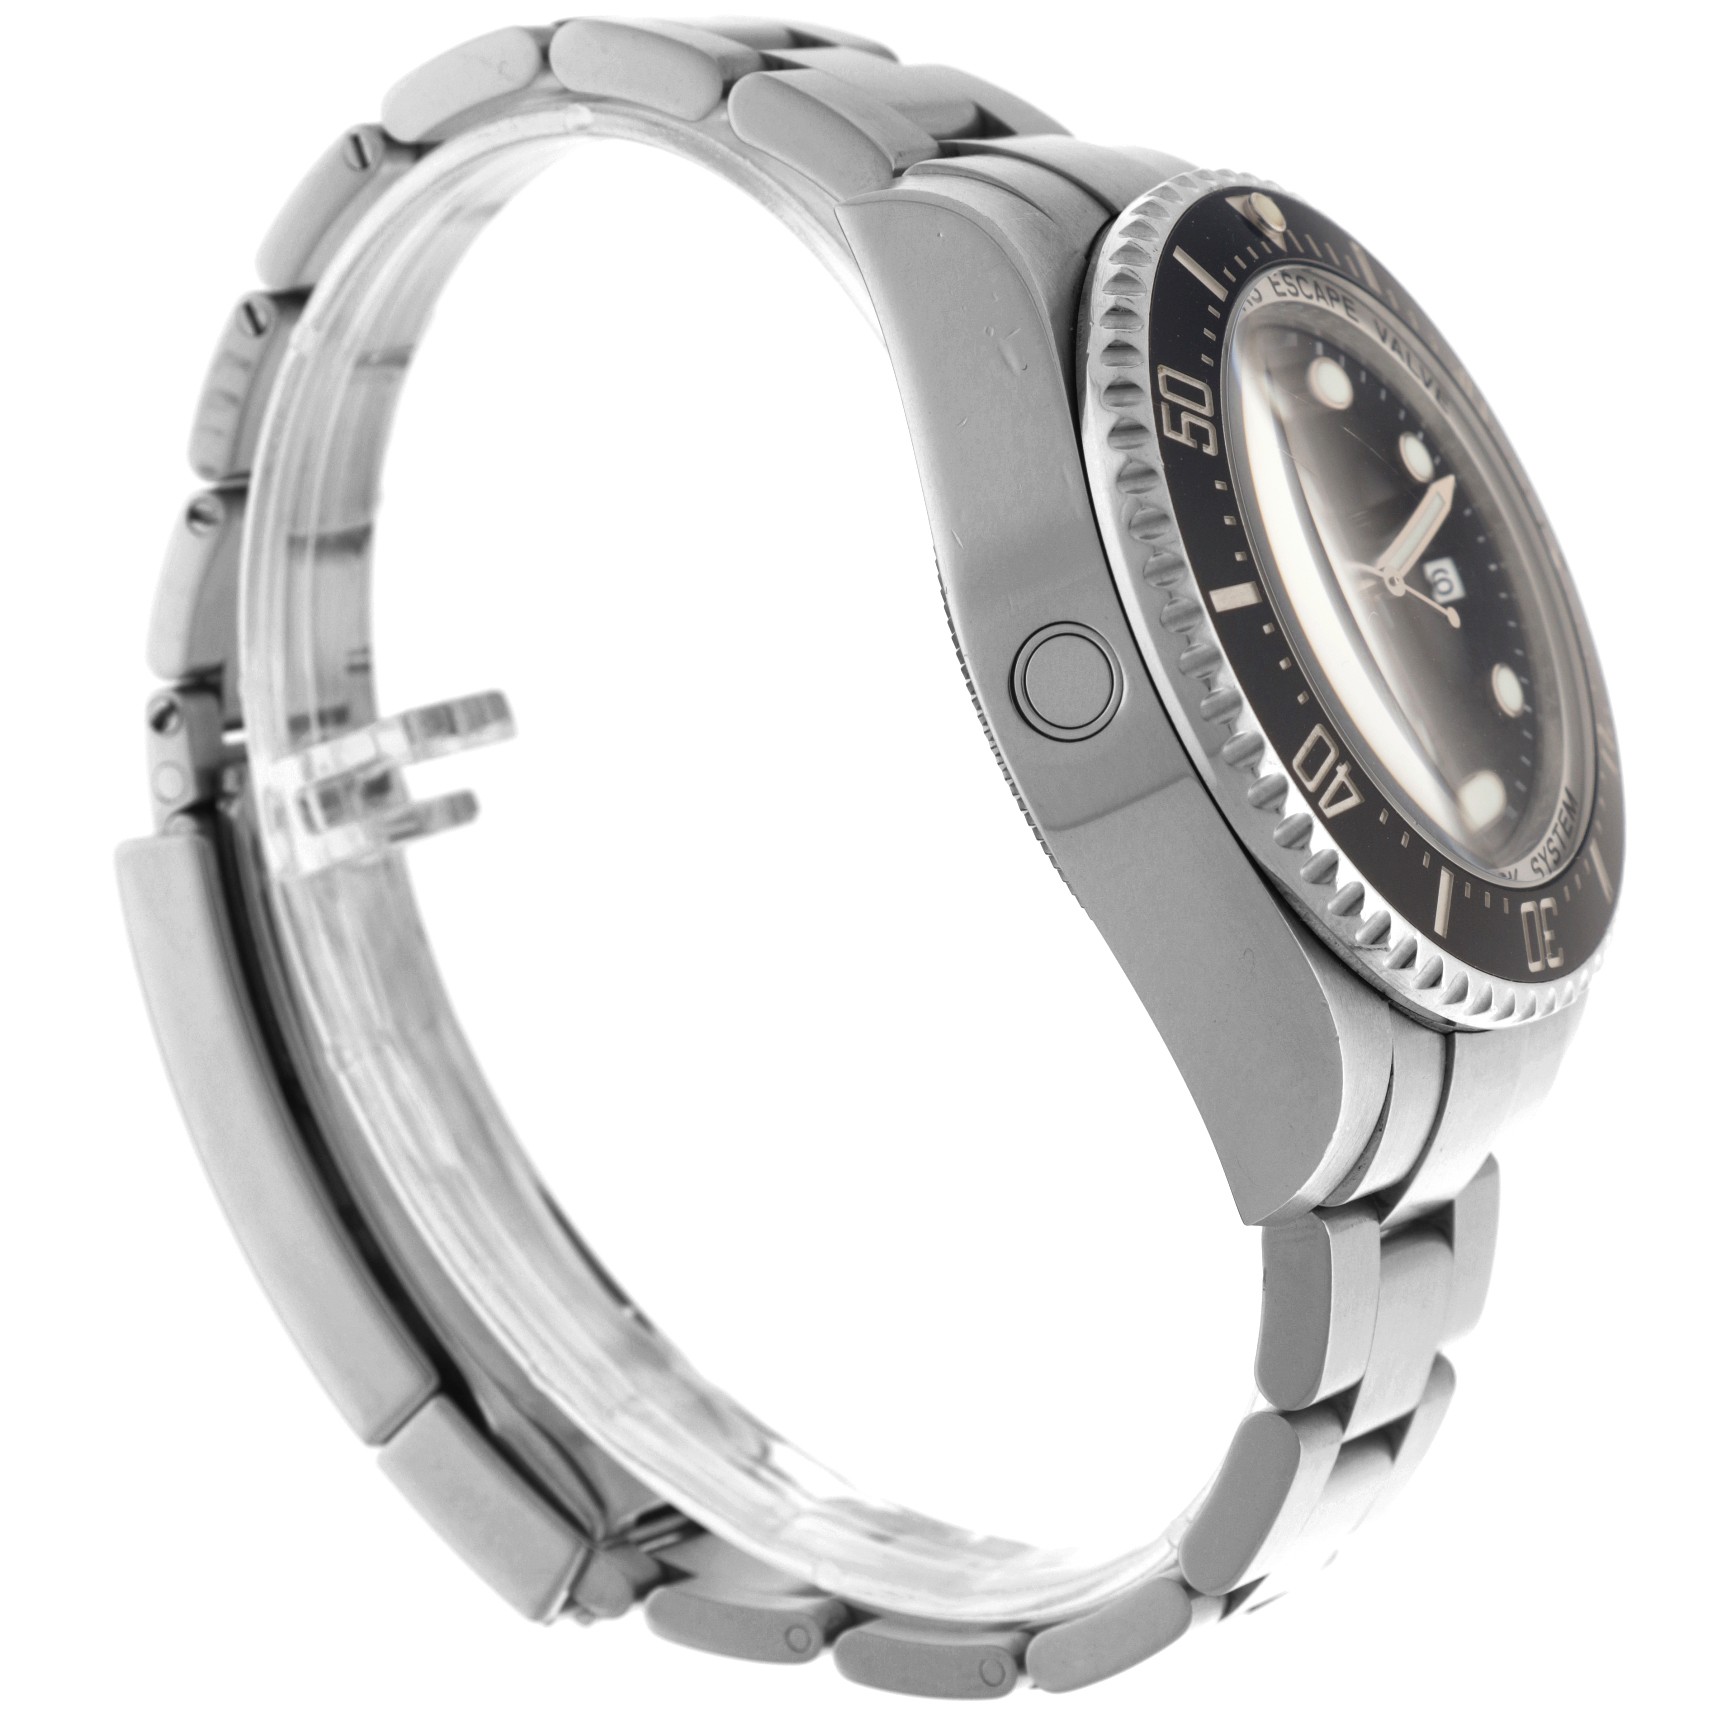 No Reserve - Rolex Sea-Dweller Deepsea 116660 - Men's watch - approx. 1991. - Image 4 of 6